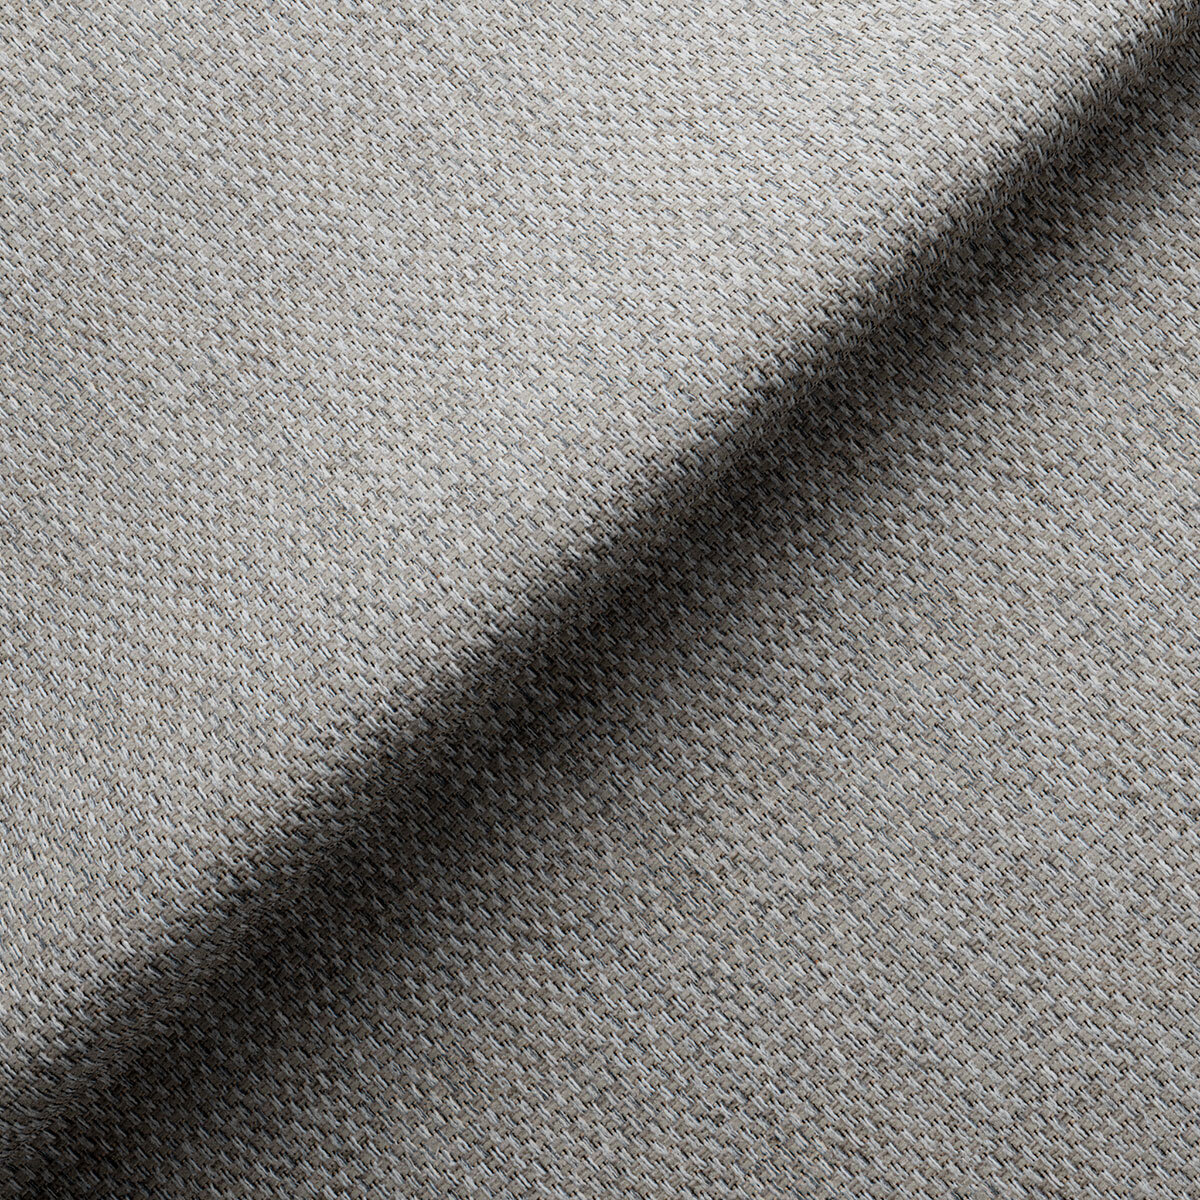 Merchant Silver Fabric 4 Seater Sofa